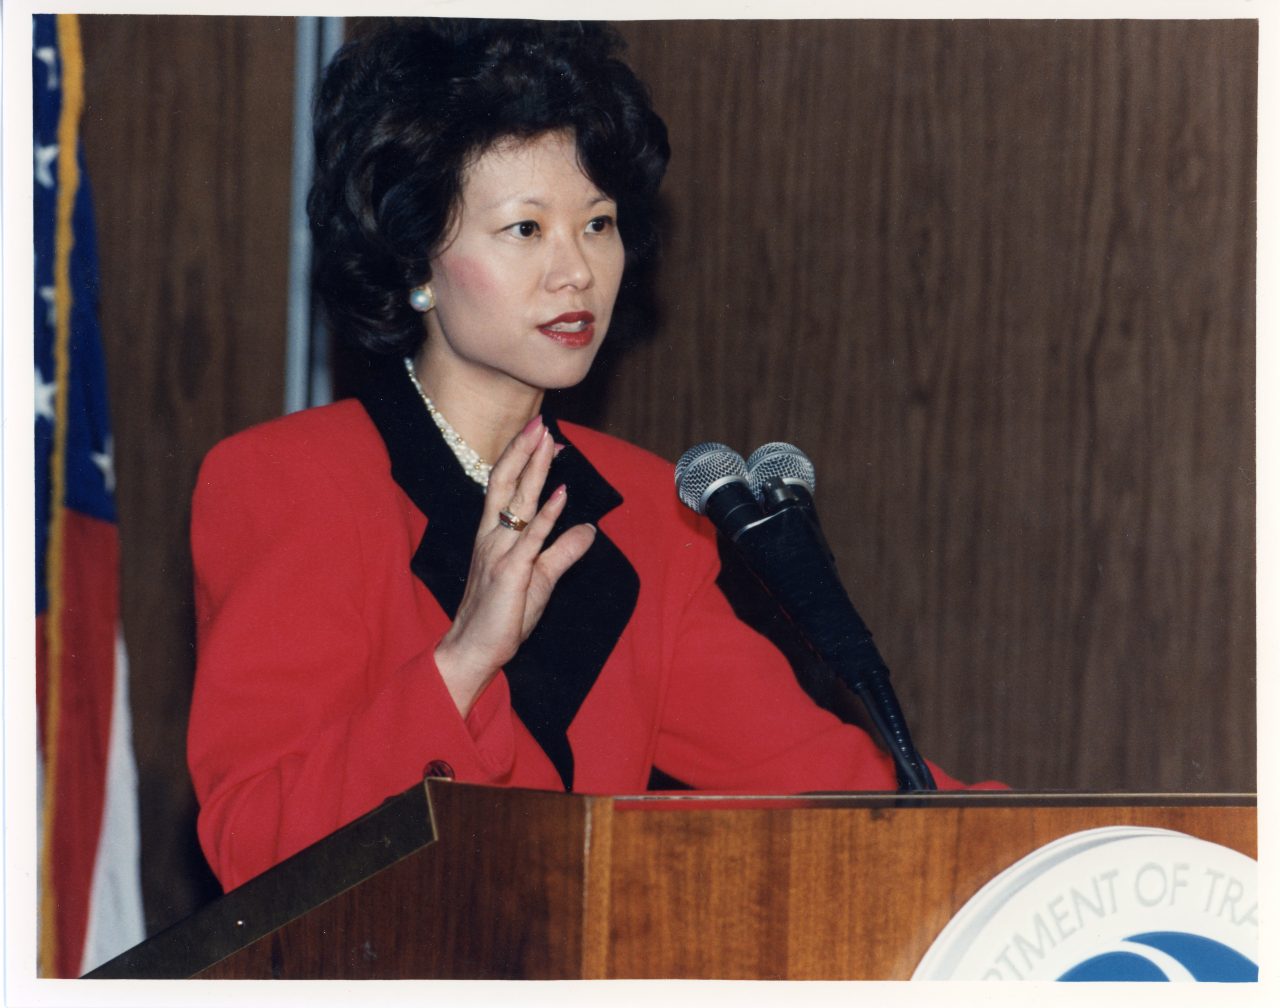 U.S. Deputy Secretary of Transportation Elaine Chao giving the budget presentation at a press conference. U.S. Department of Transportation, Washington, D.C.